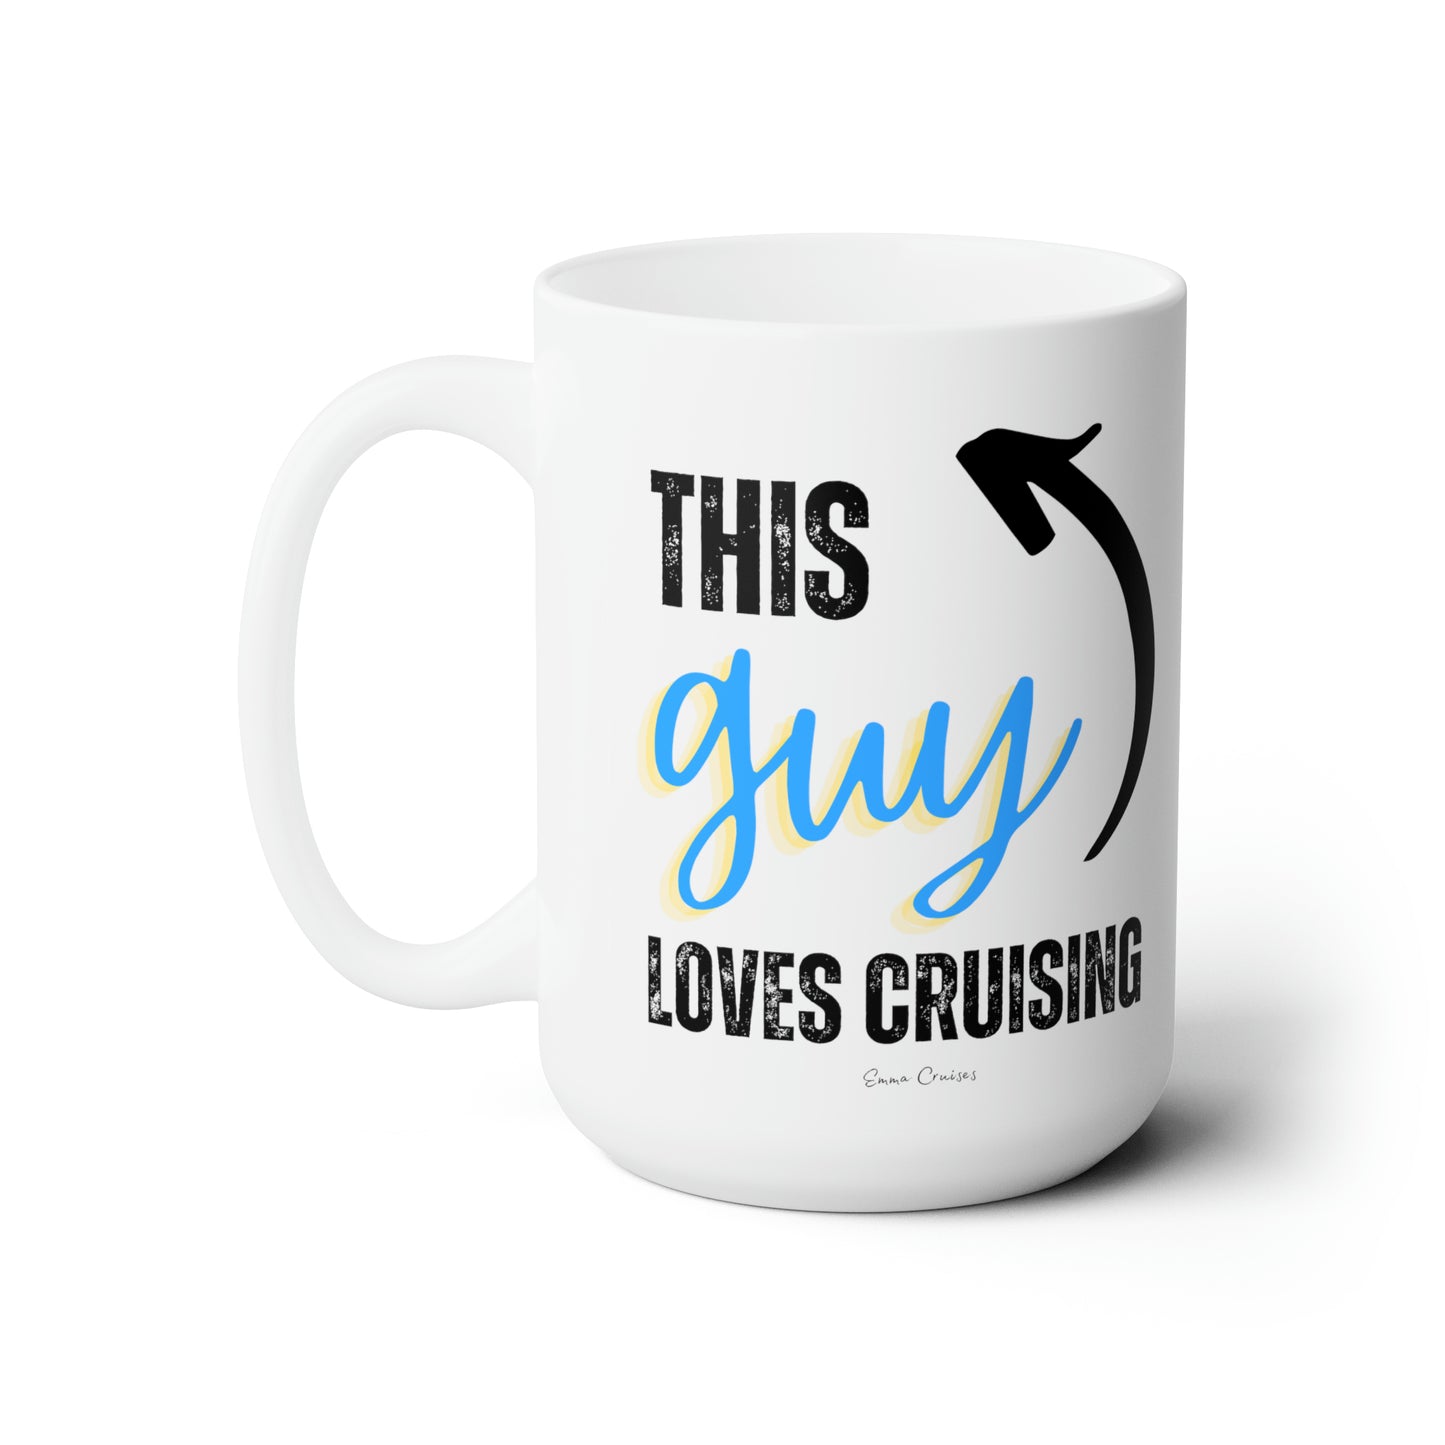 This Guy Loves Cruising - Ceramic Mug